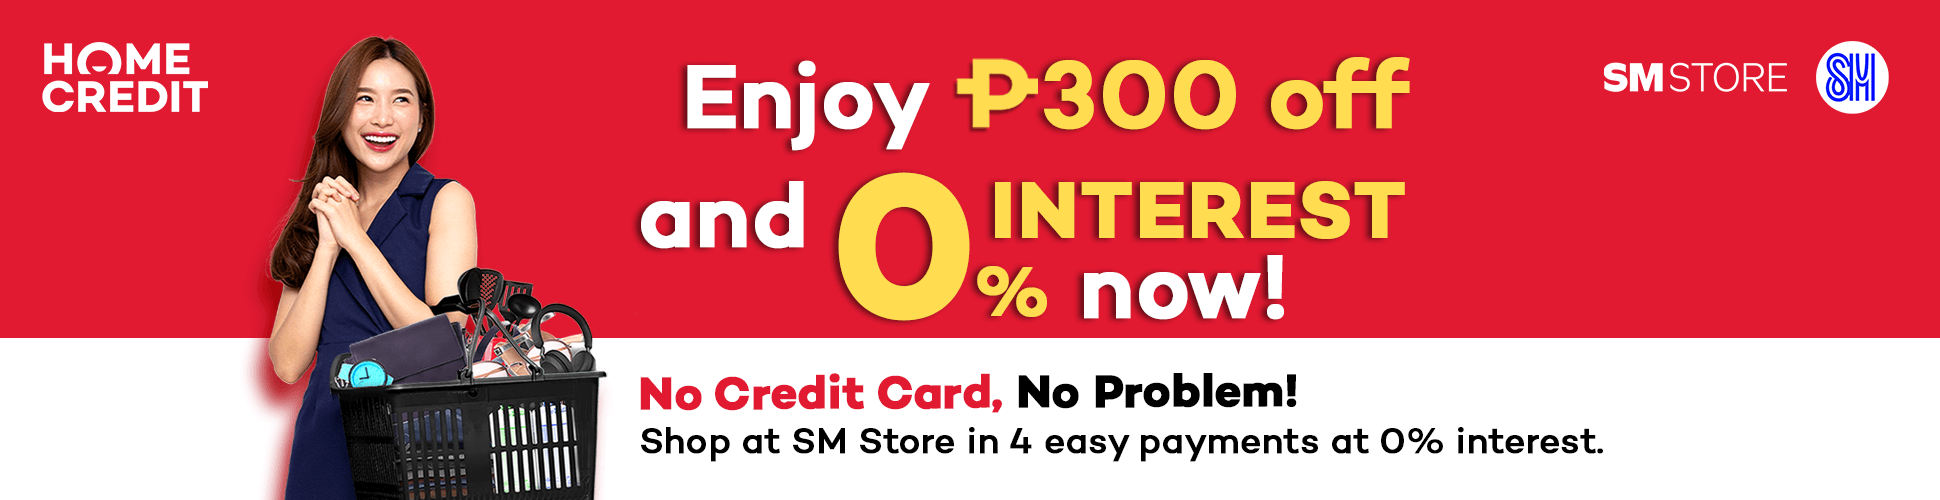 SM Store 0% Interest Offer